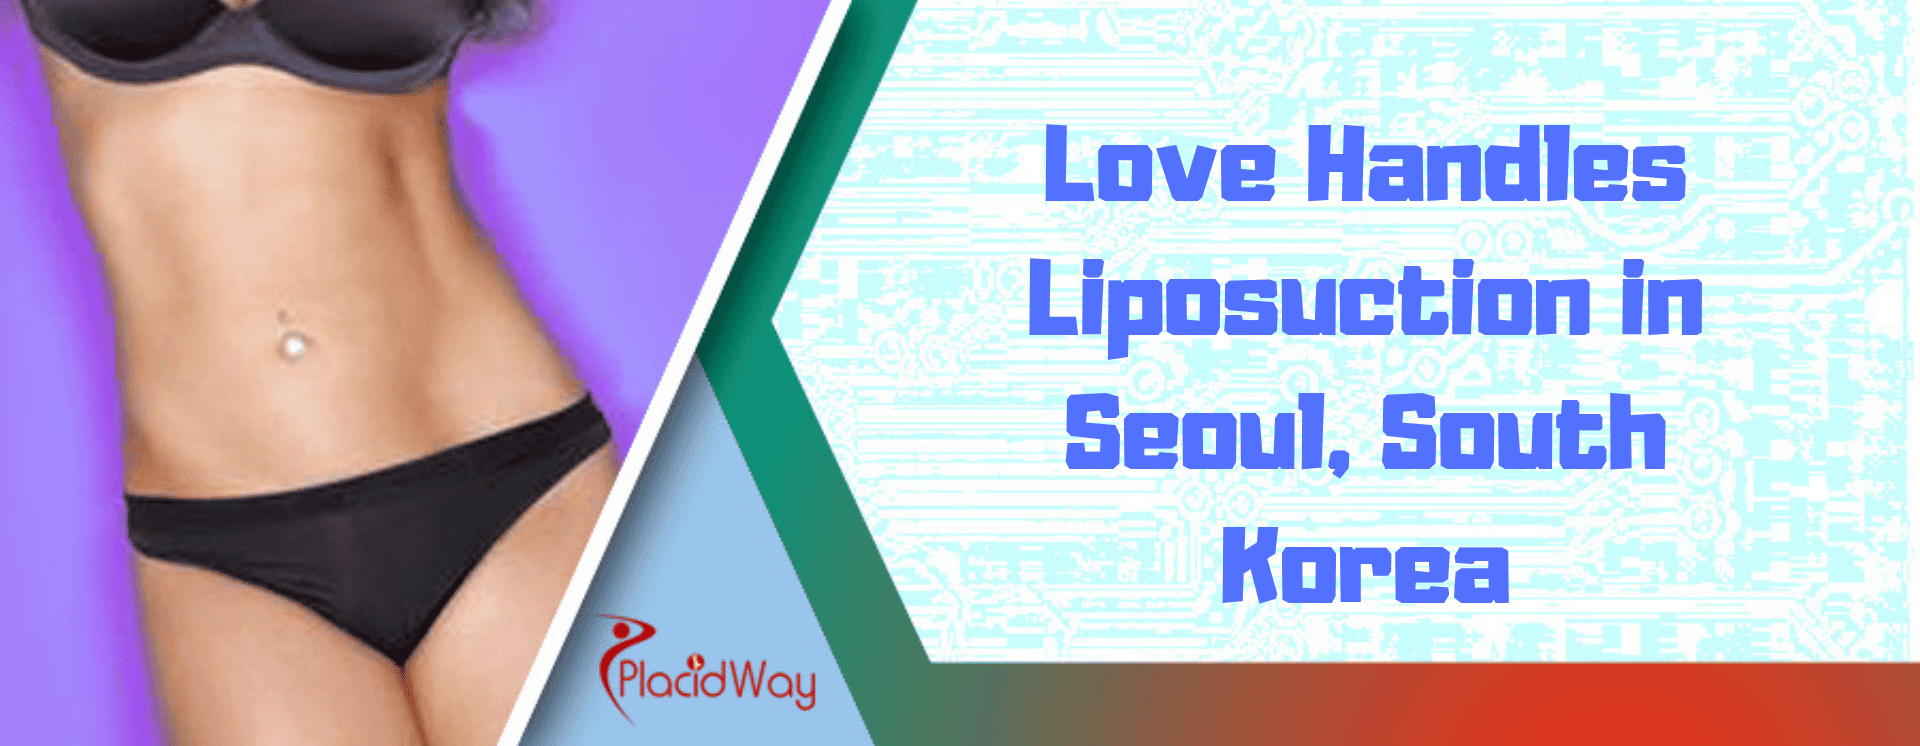 Love Handles Liposuction in Seoul, South Korea